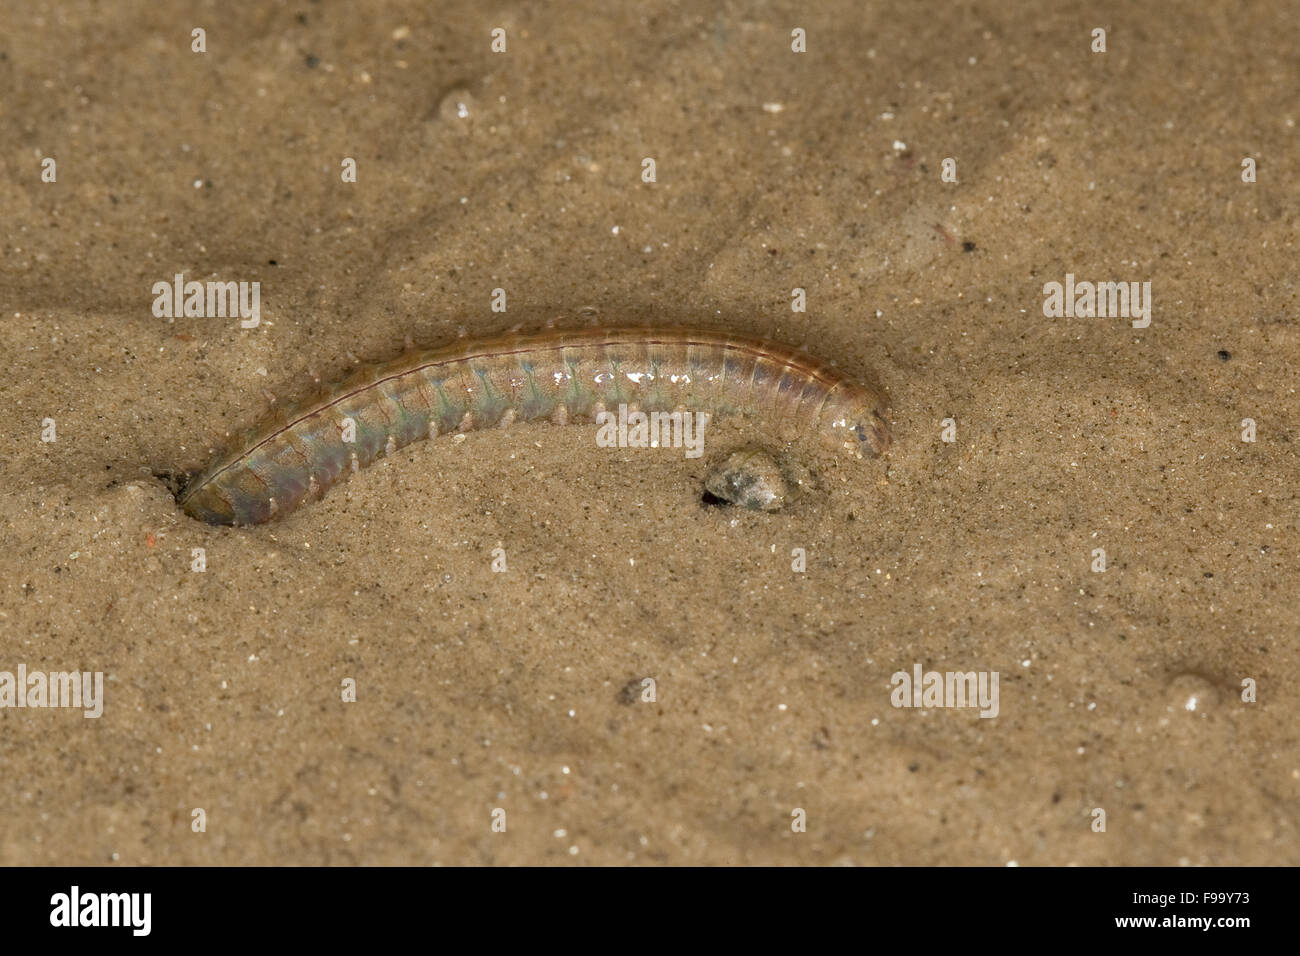 See-Ringelwurm ragworm, estuaire, Schillender Seeringelwurm, Hediste diversicolor Nereis diversicolor, Banque D'Images